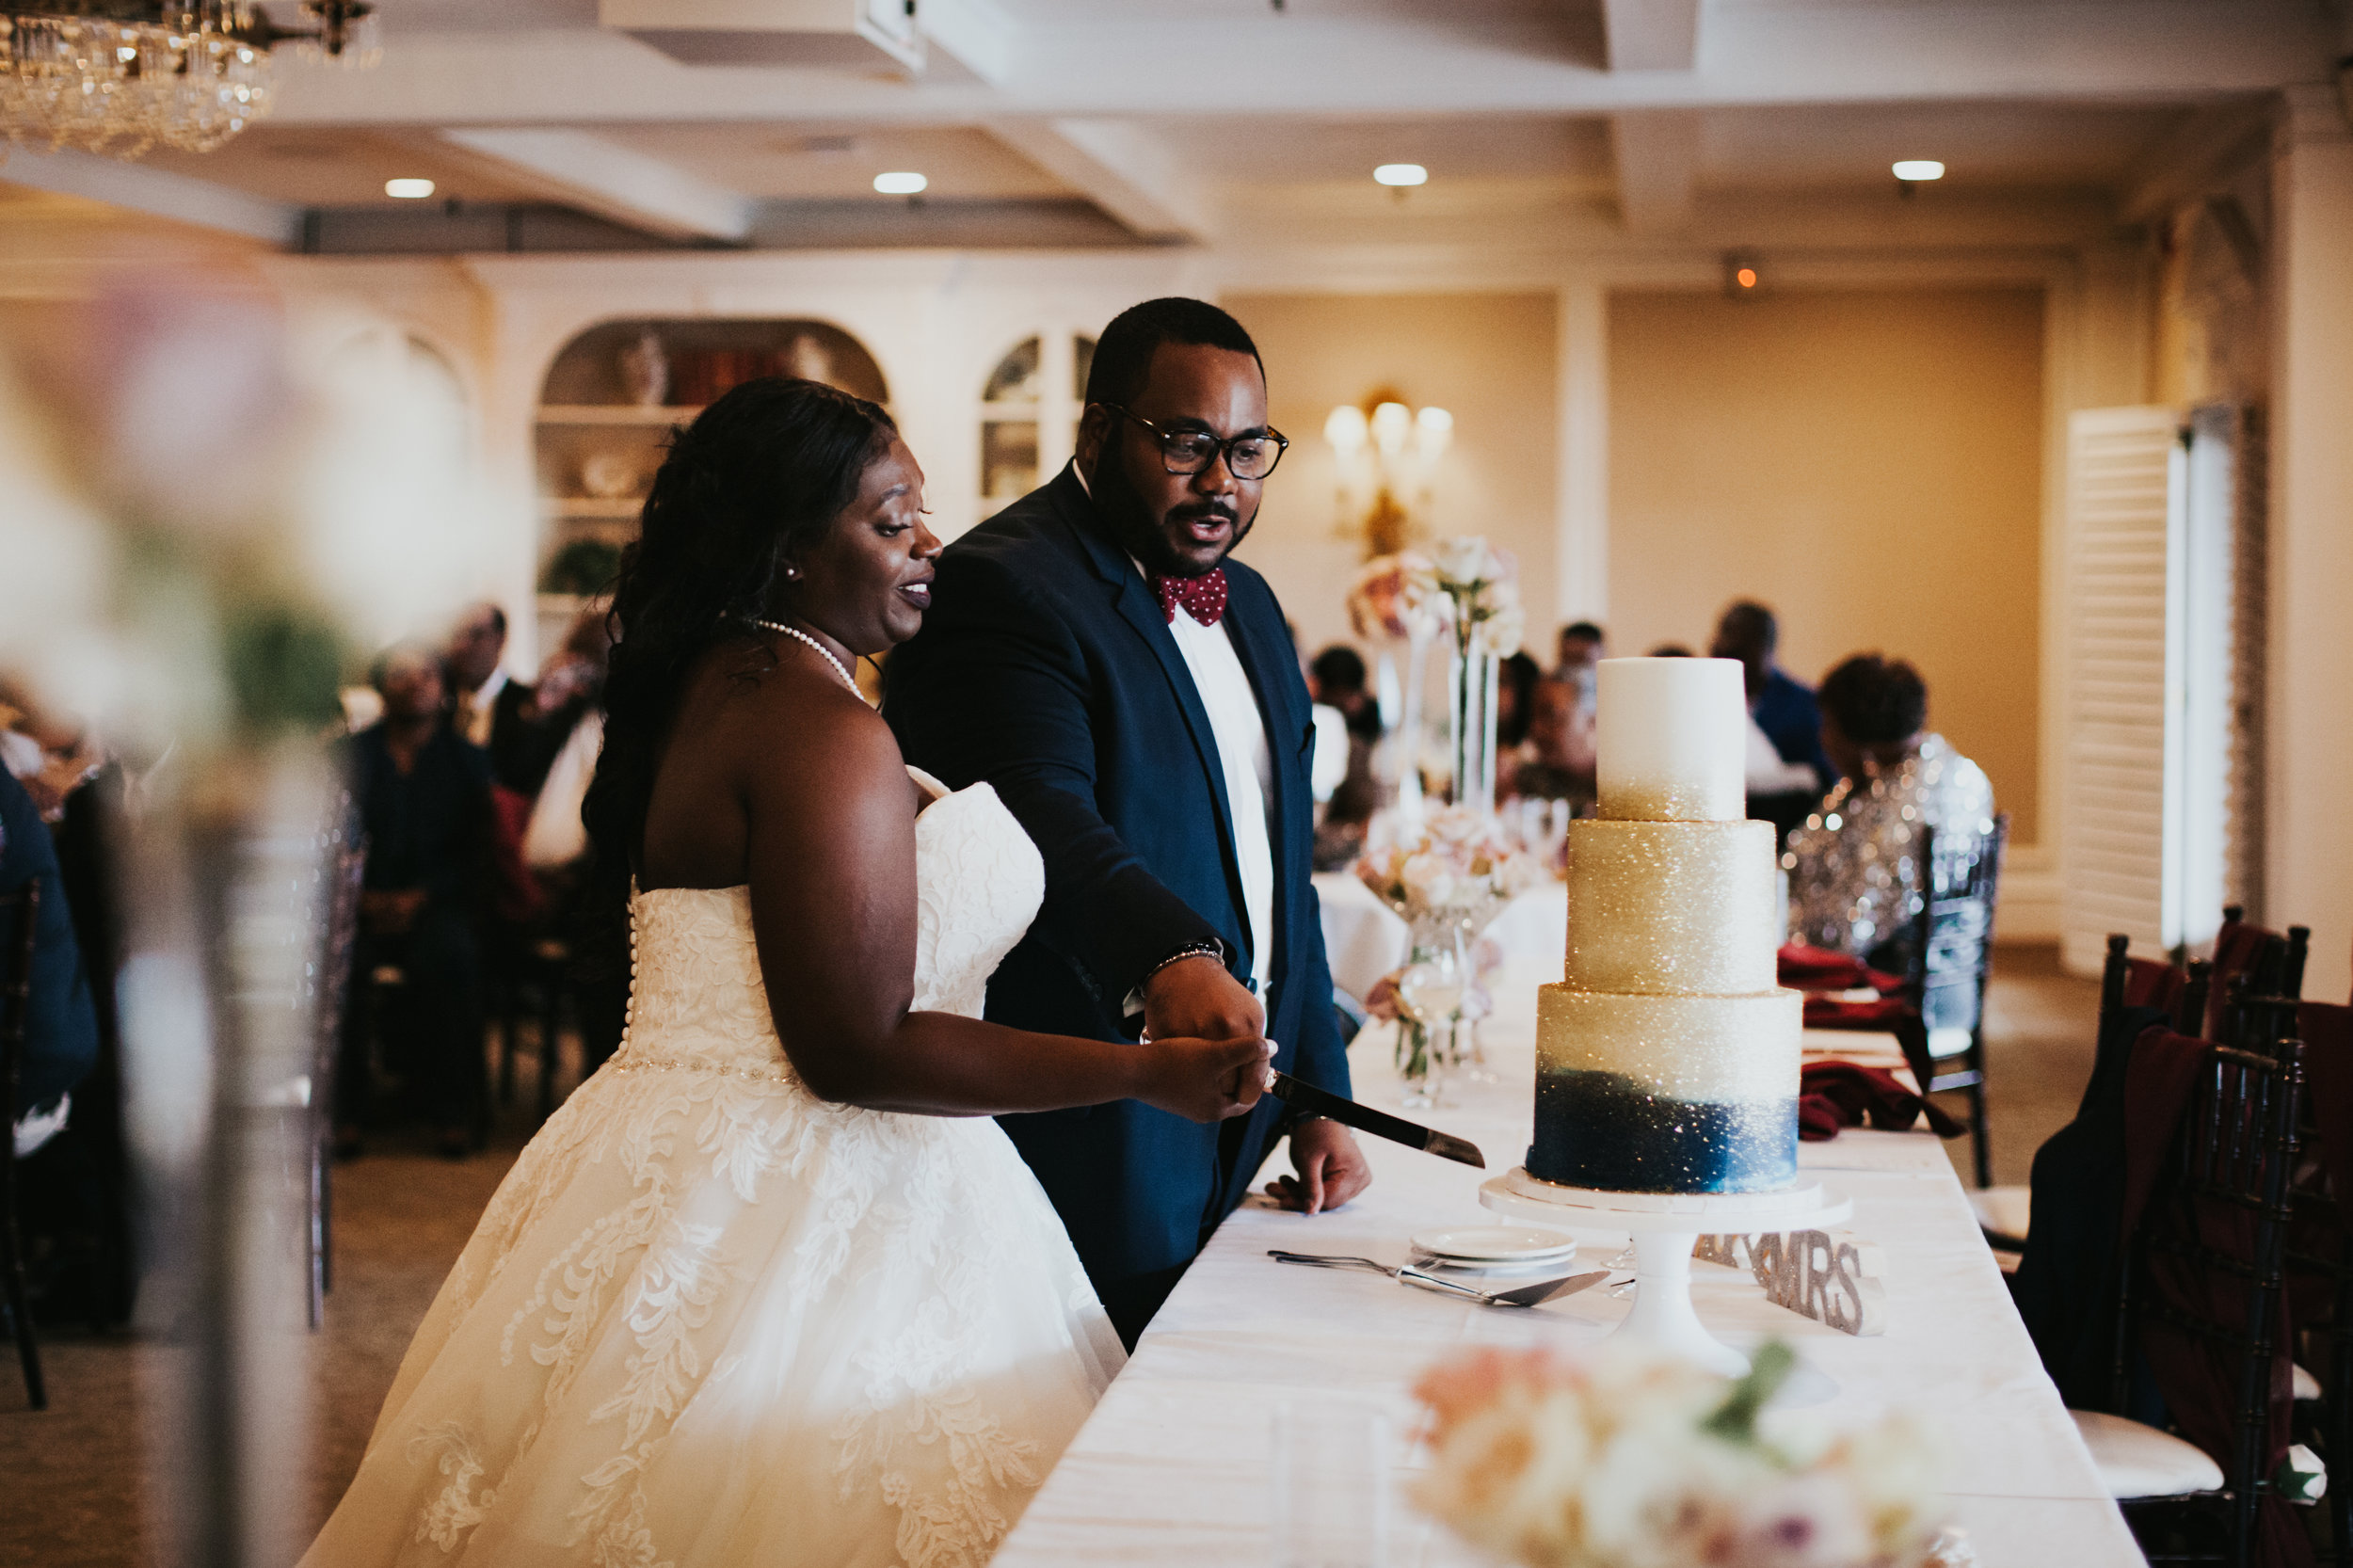  Hope Valley Country Club, Raleigh NC | Fall wedding | Wedding reception photos | Cake-cutting photos | Marina Rey Photography 